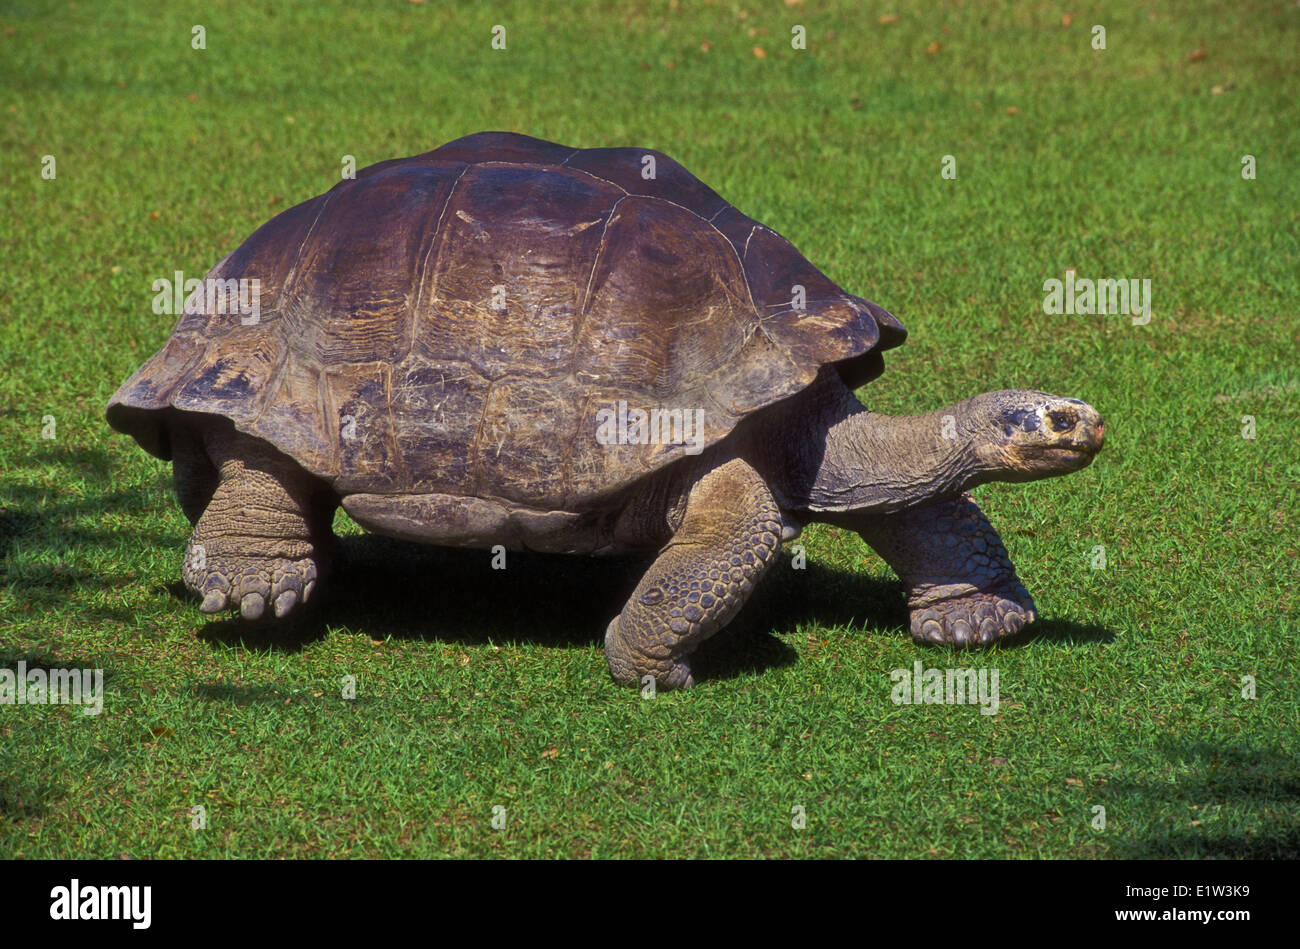 Galapagos Giant Tortoise (Chelonoidis elephantopus). Stock Photo